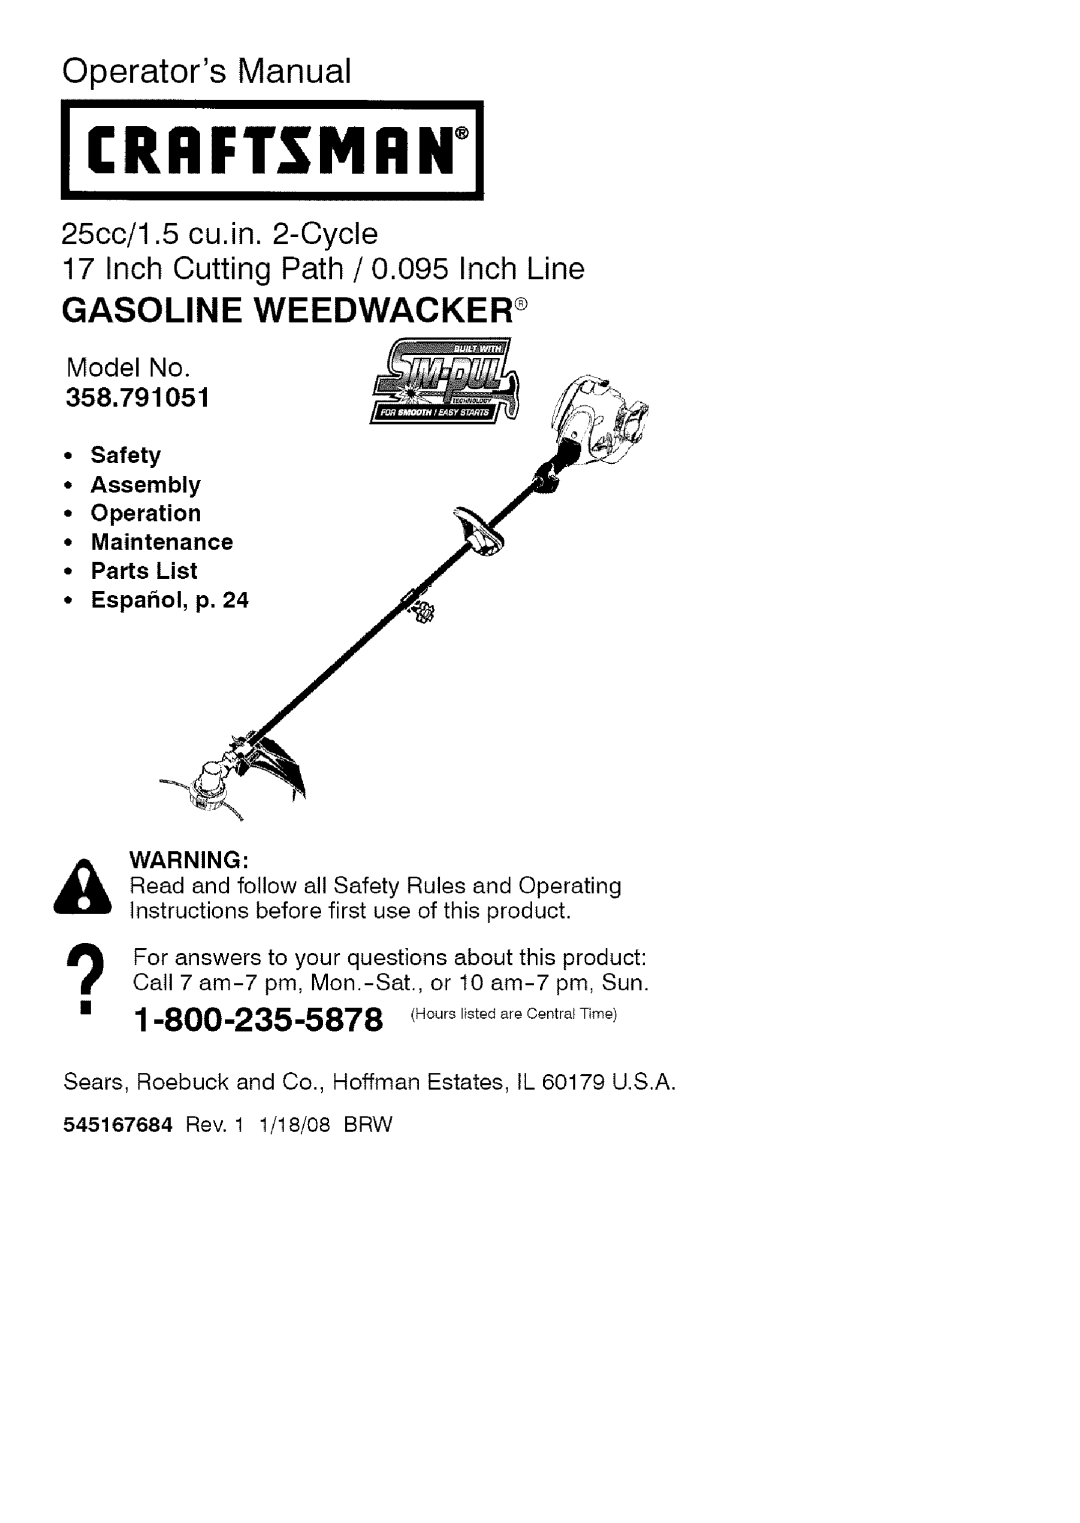 Craftsman 358.791051 manual 25cc/1.5 cu.in. 2-Cycle, Inch Cutting Path / 0.095 Inch Line, Gasoline Weedwaoker 